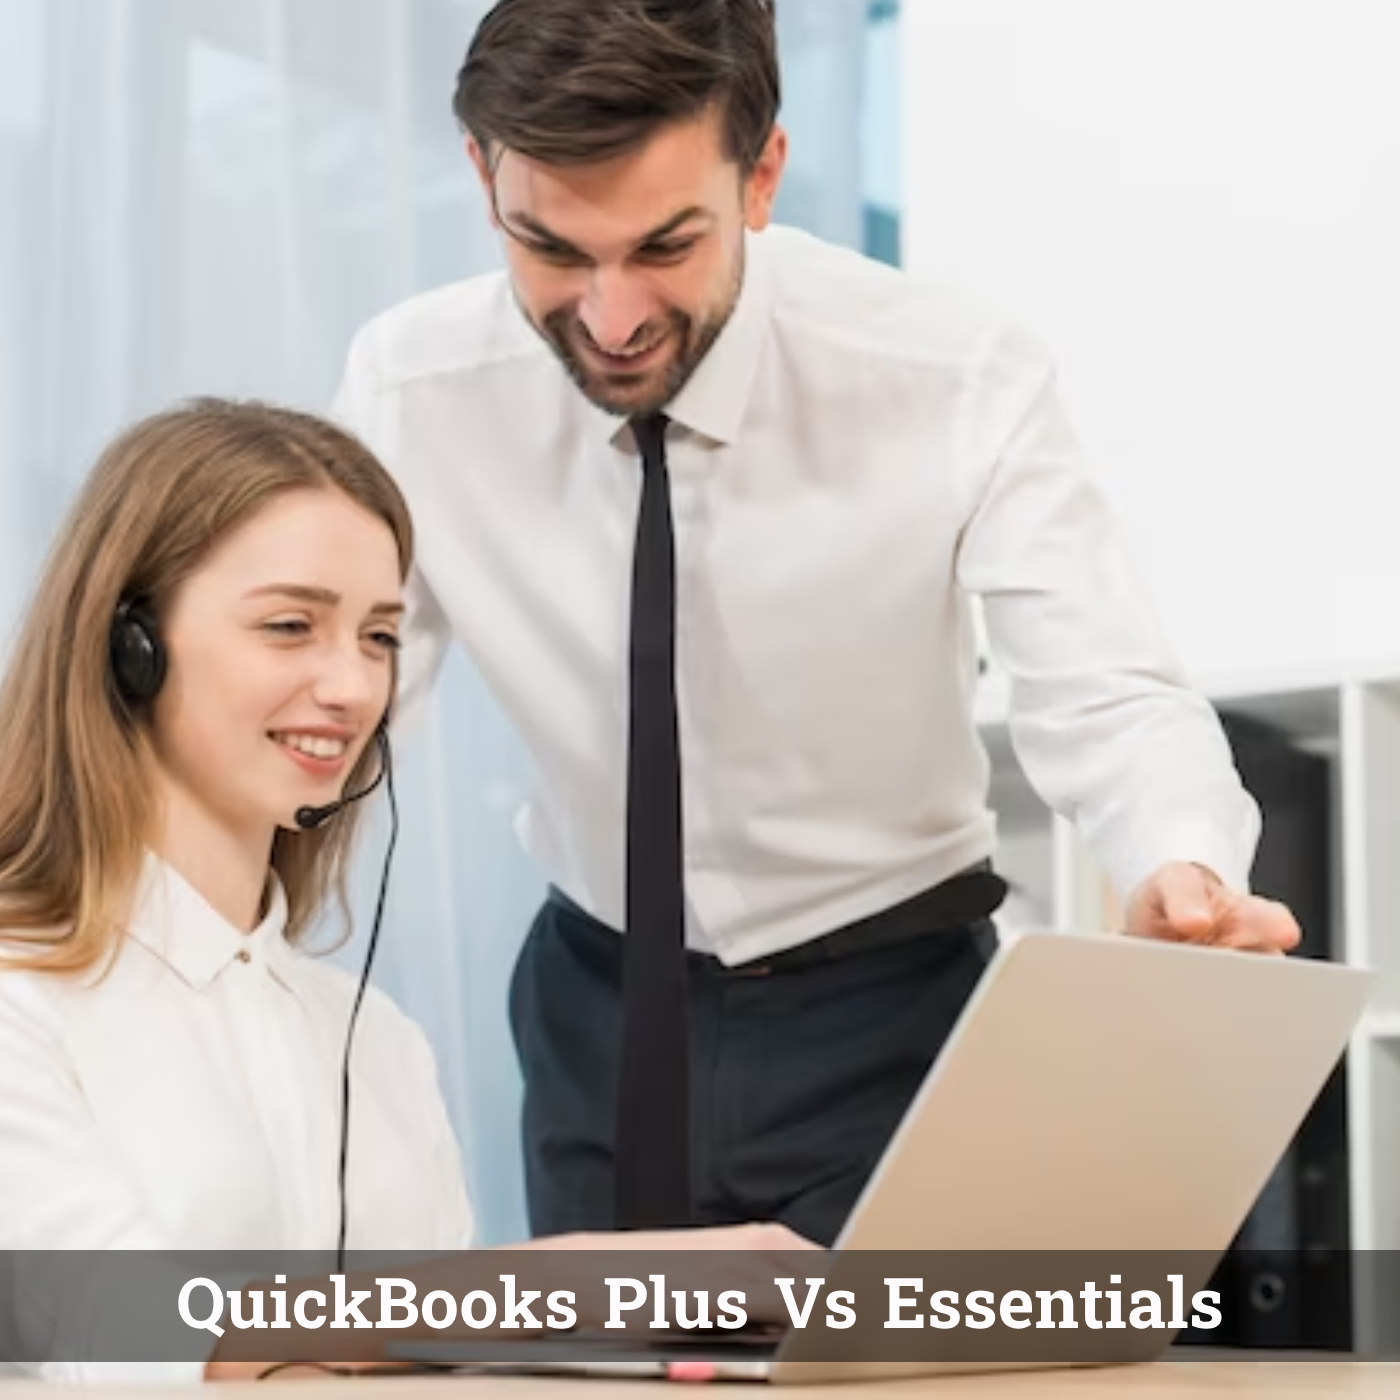 QuickBooks Plus Vs Essentials: Pricing, Features, and Benefits Compared